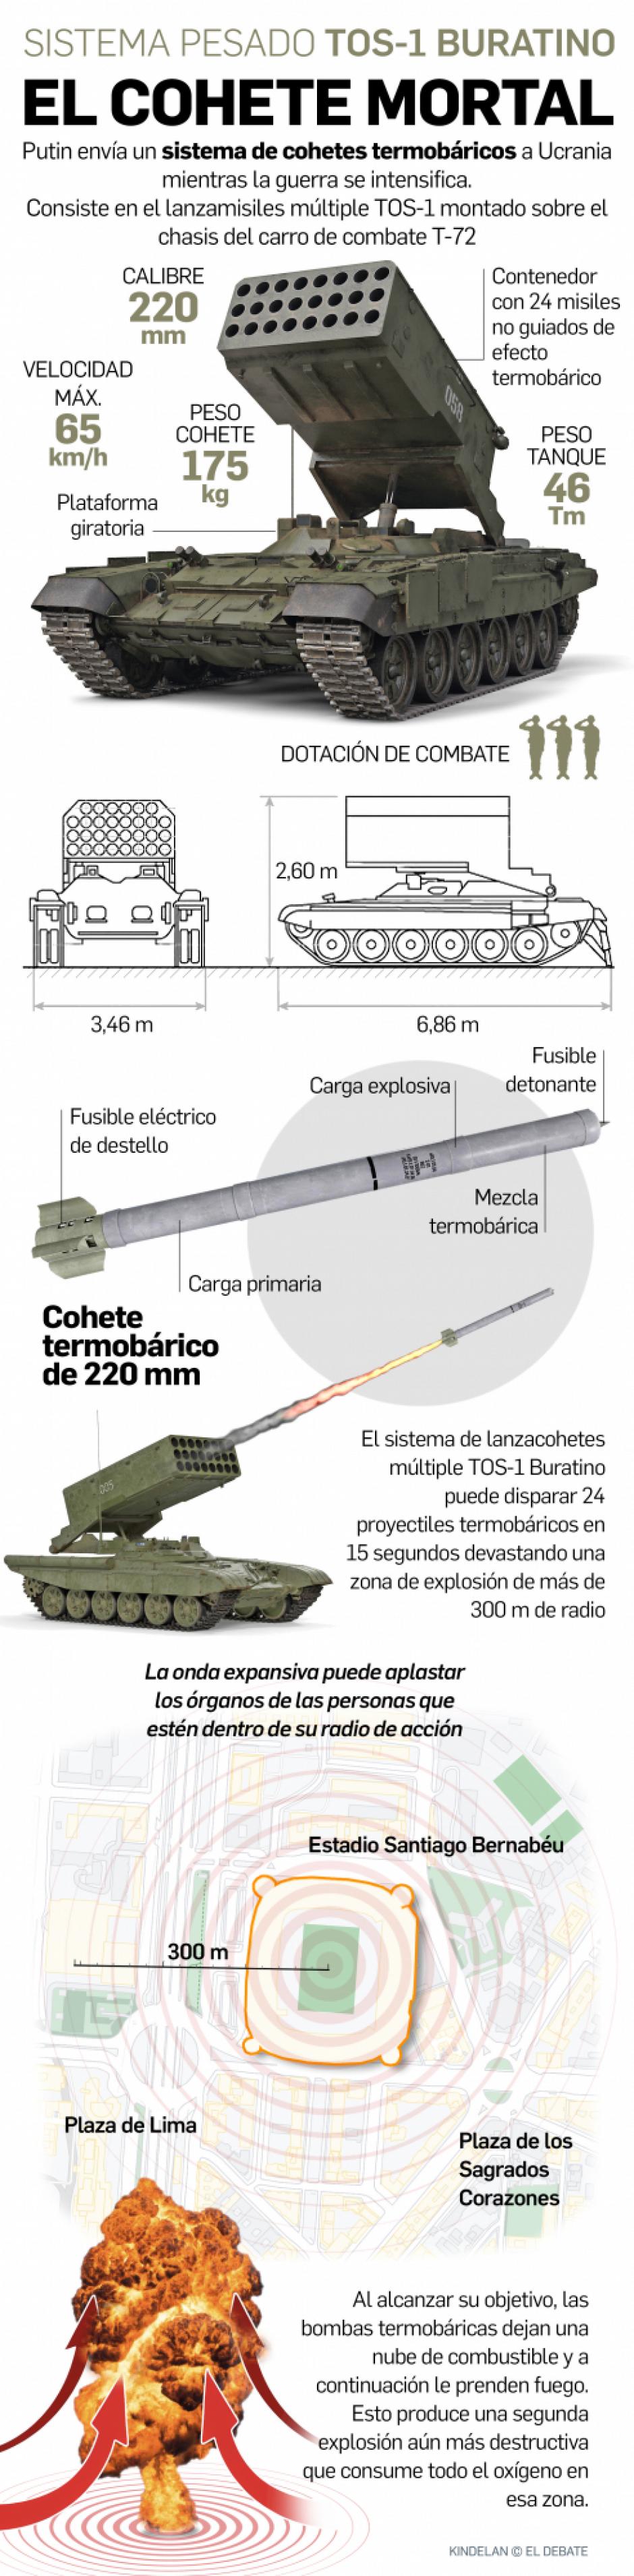 Infografía del carro lanza cohetes ruso desplazado a Ucrania